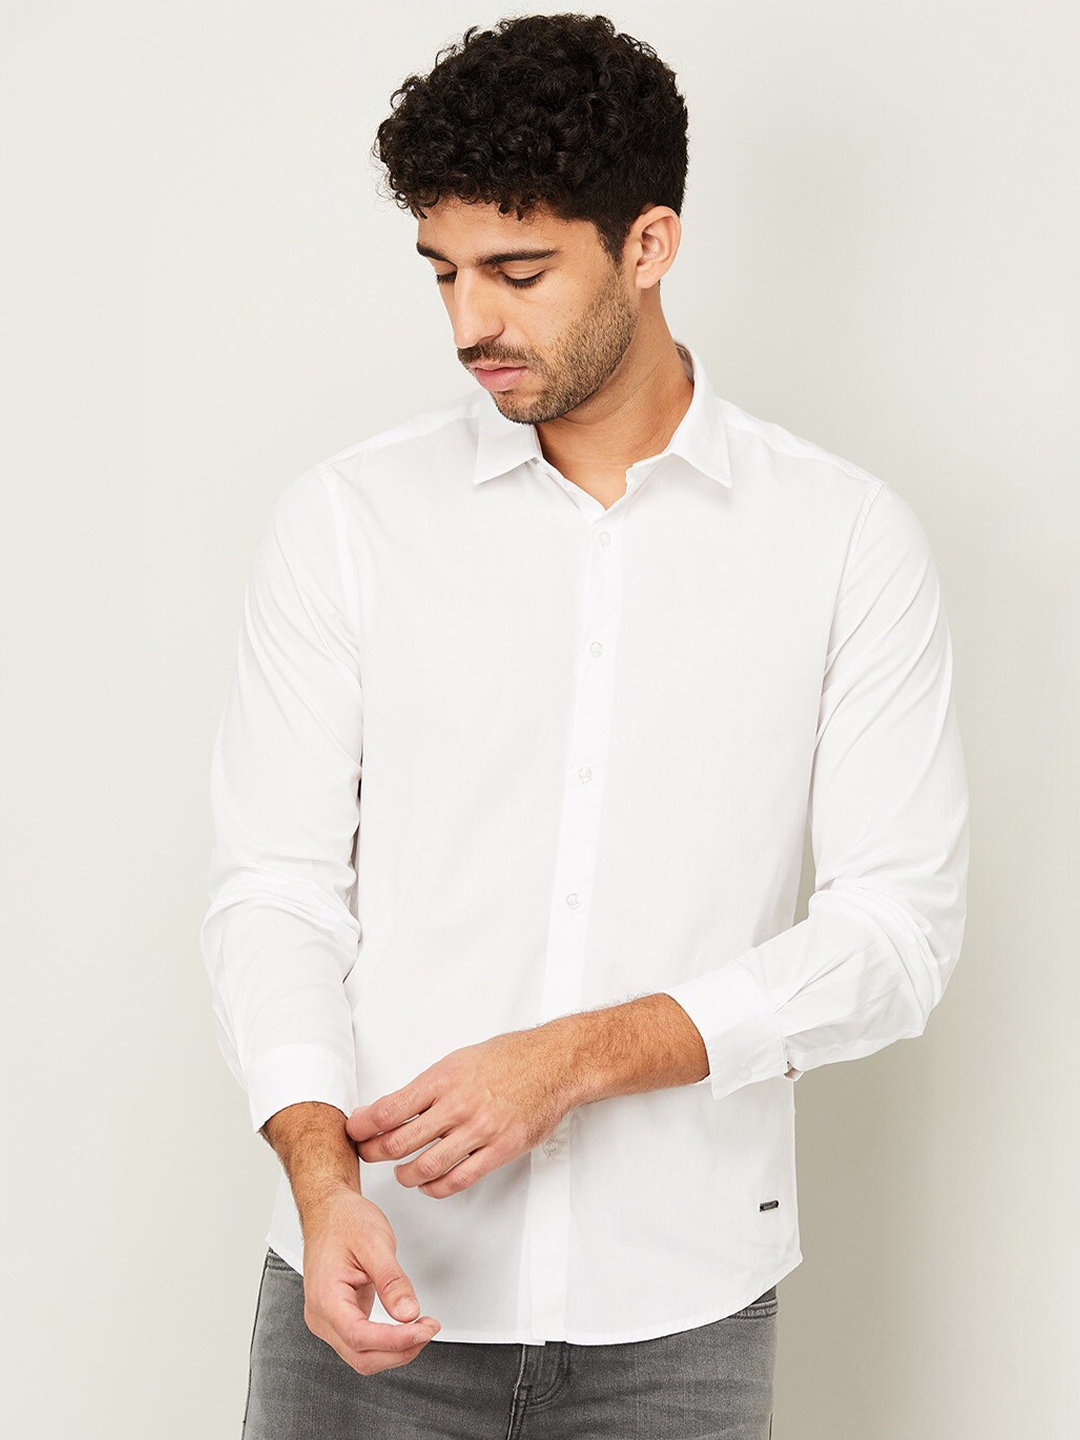 Buy Bossini Men White Cotton Casual Shirt - Shirts for Men 19205080 ...